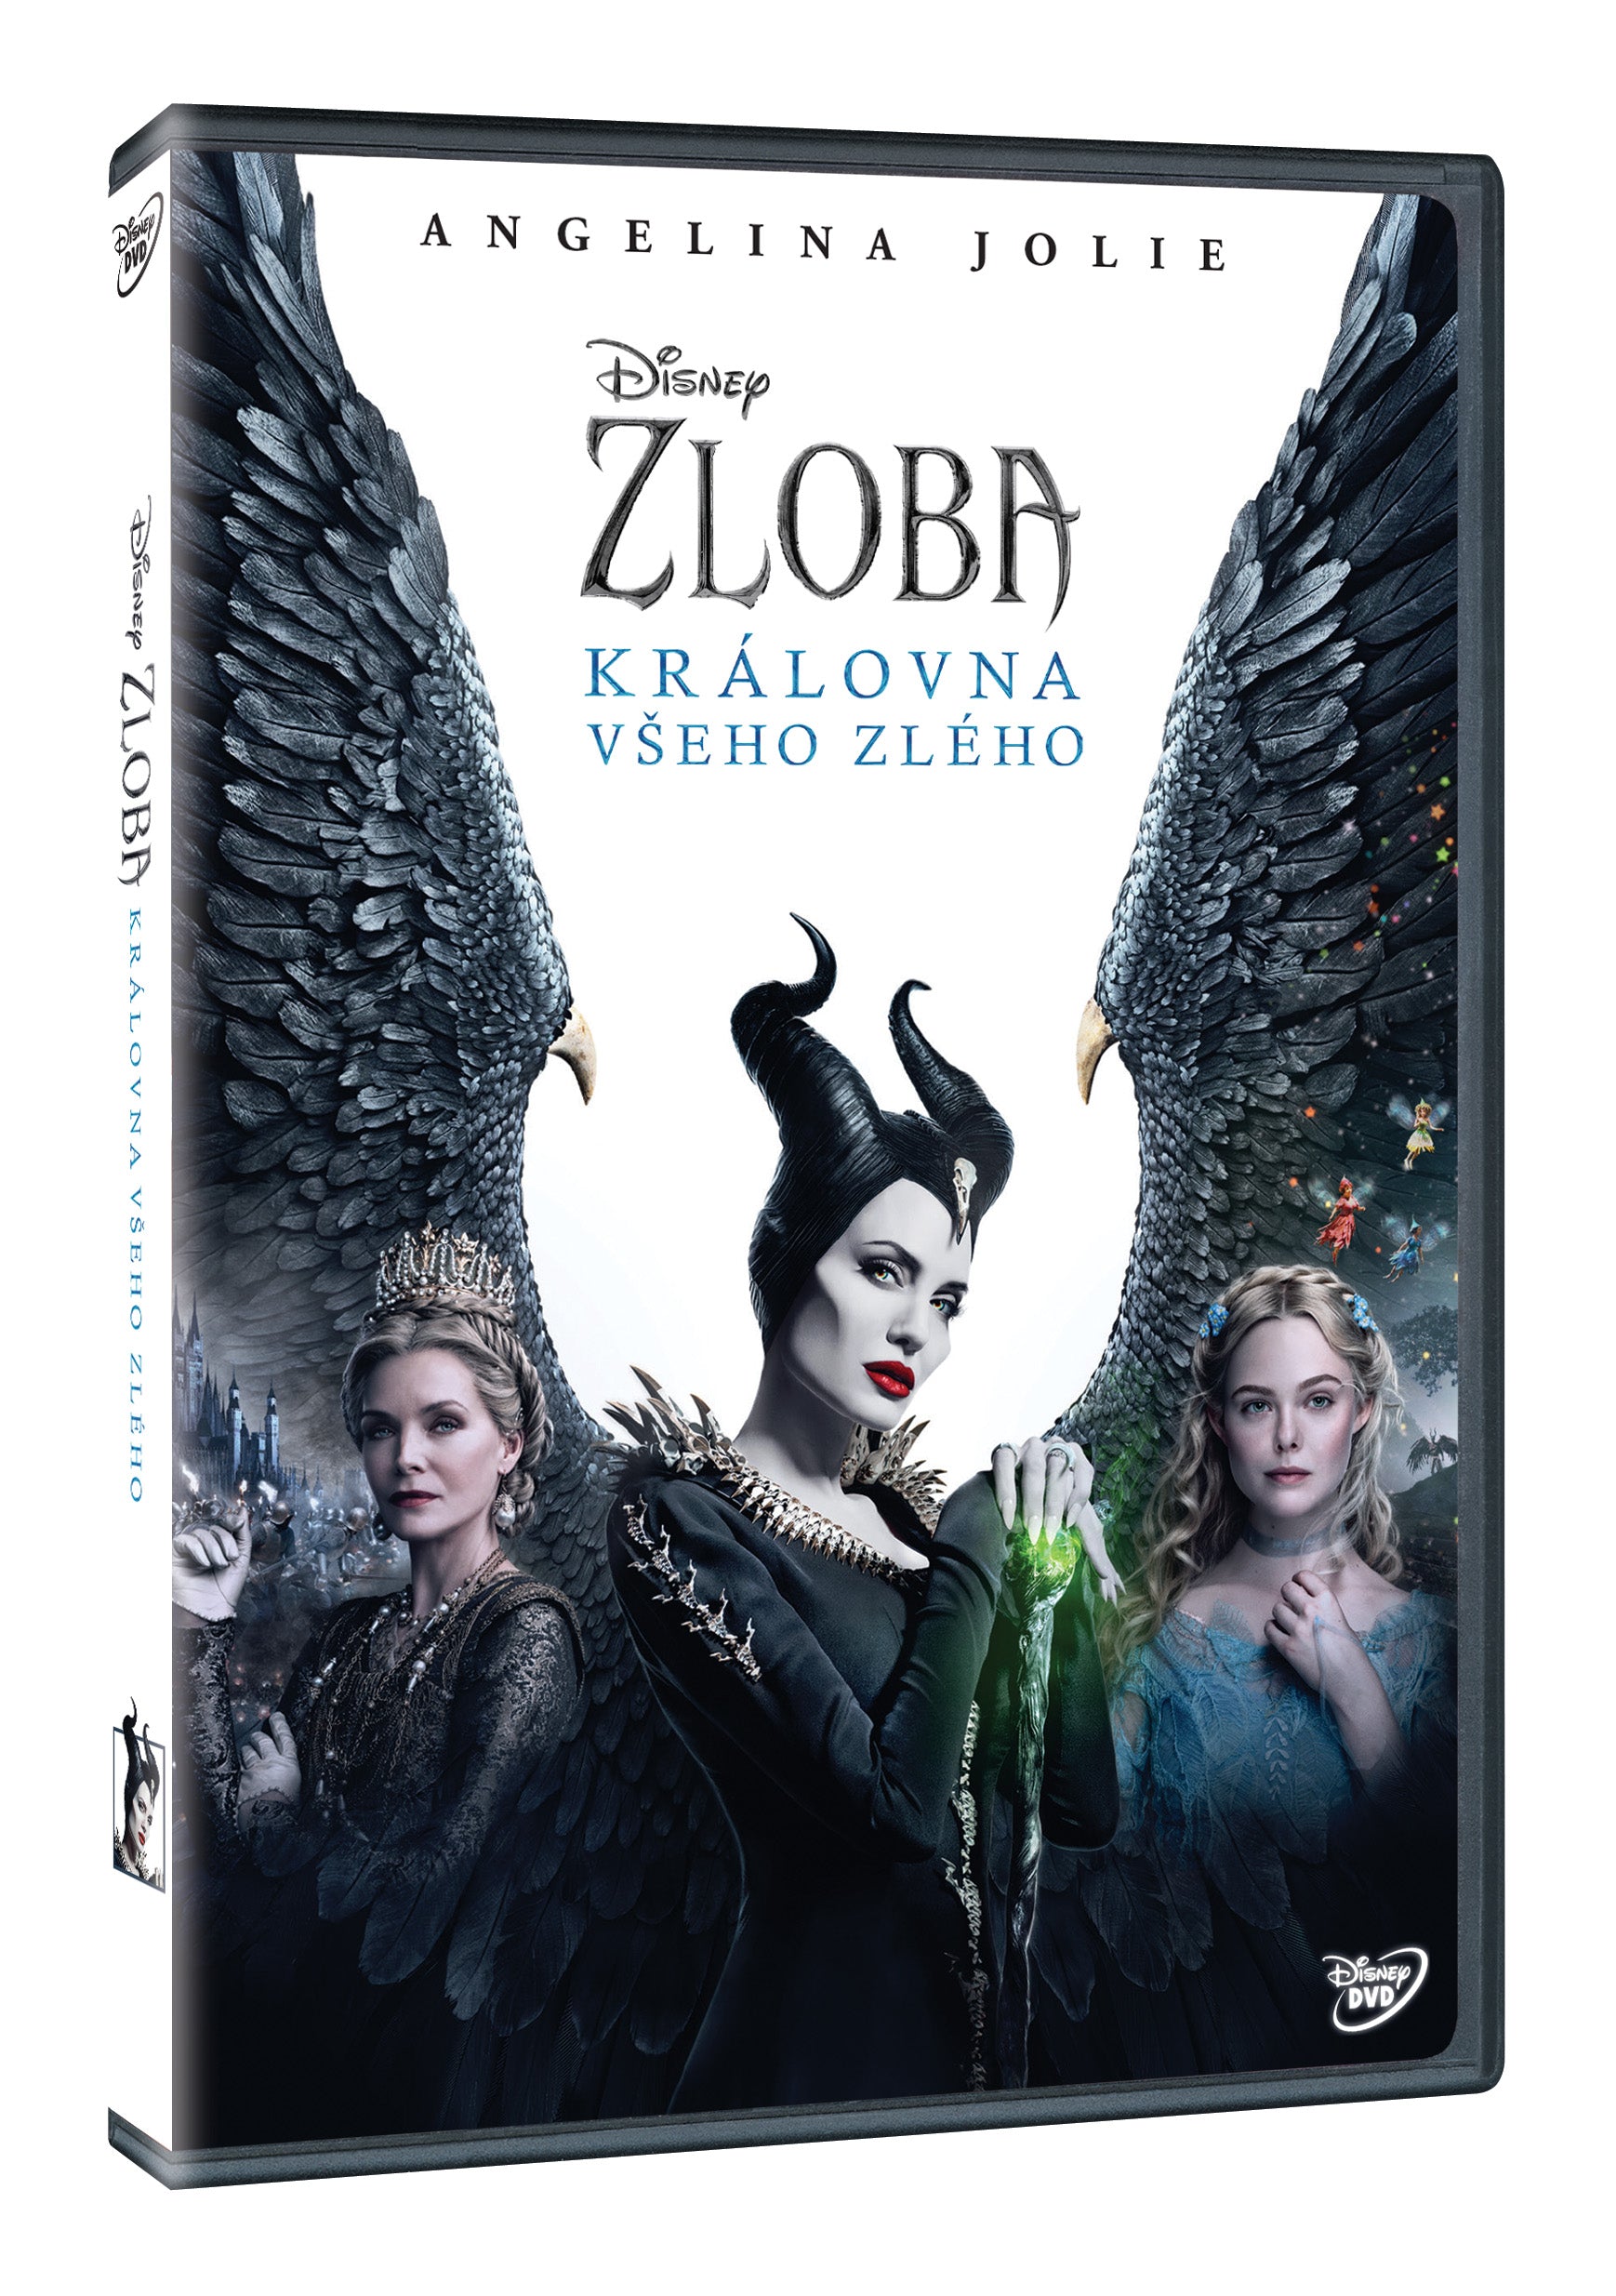 Zloba: Kralovna vseho zleho DVD / Maleficent: Mistress of Evil